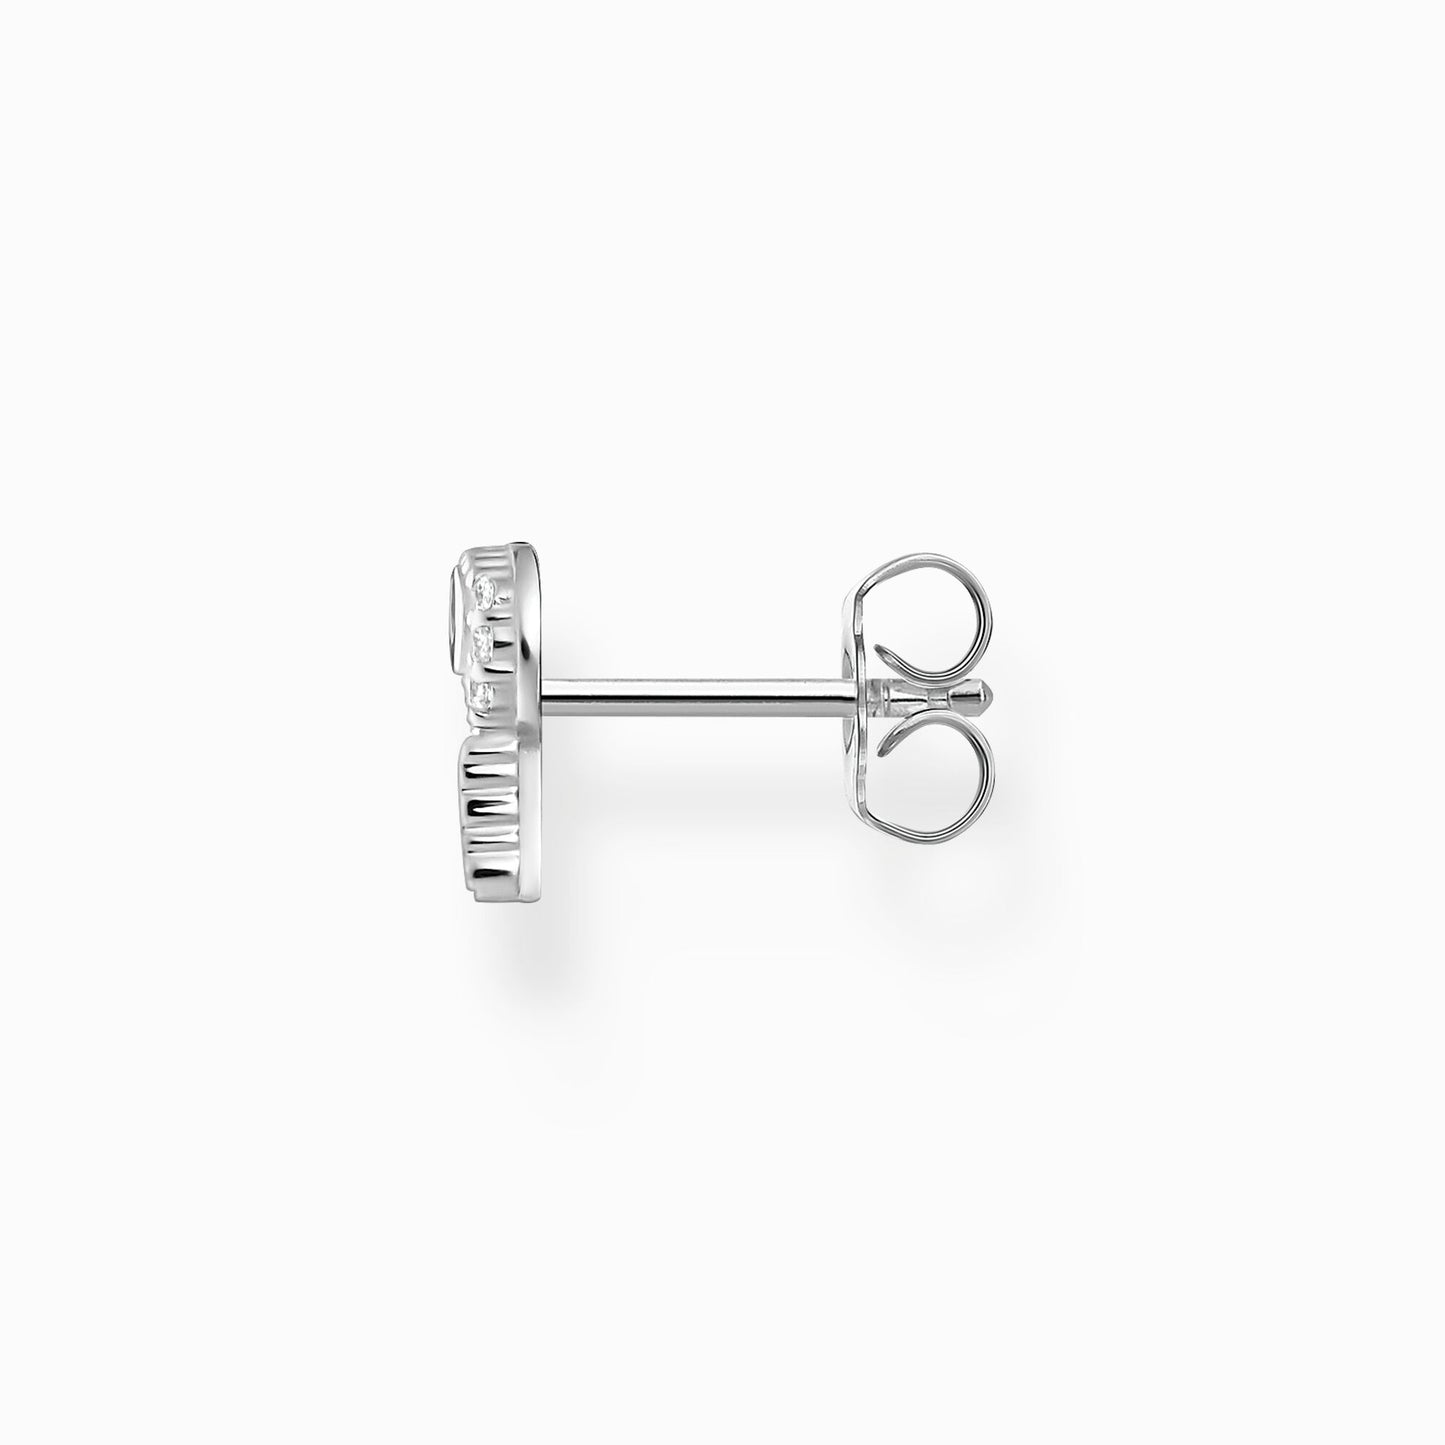 Thomas Sabo Sterling Silver Cubic Zirconia Single Key Earring H2220-051-14